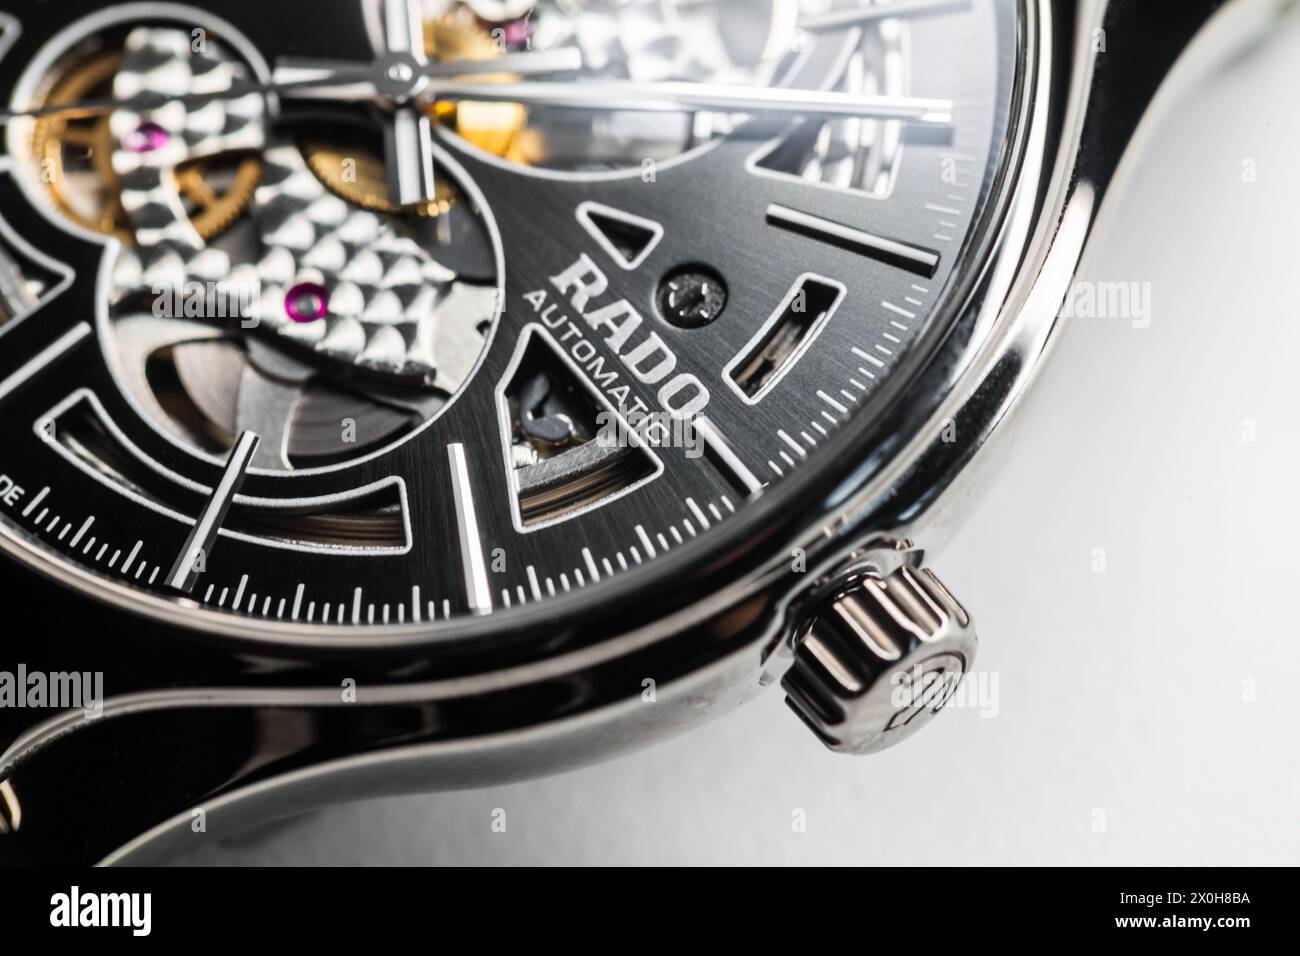 Lengnau, Switzerland - November 11, 2021: Close up photo of luxury Swiss made mechanical wrist watch with black clock face and body made of ceramics. Stock Photo